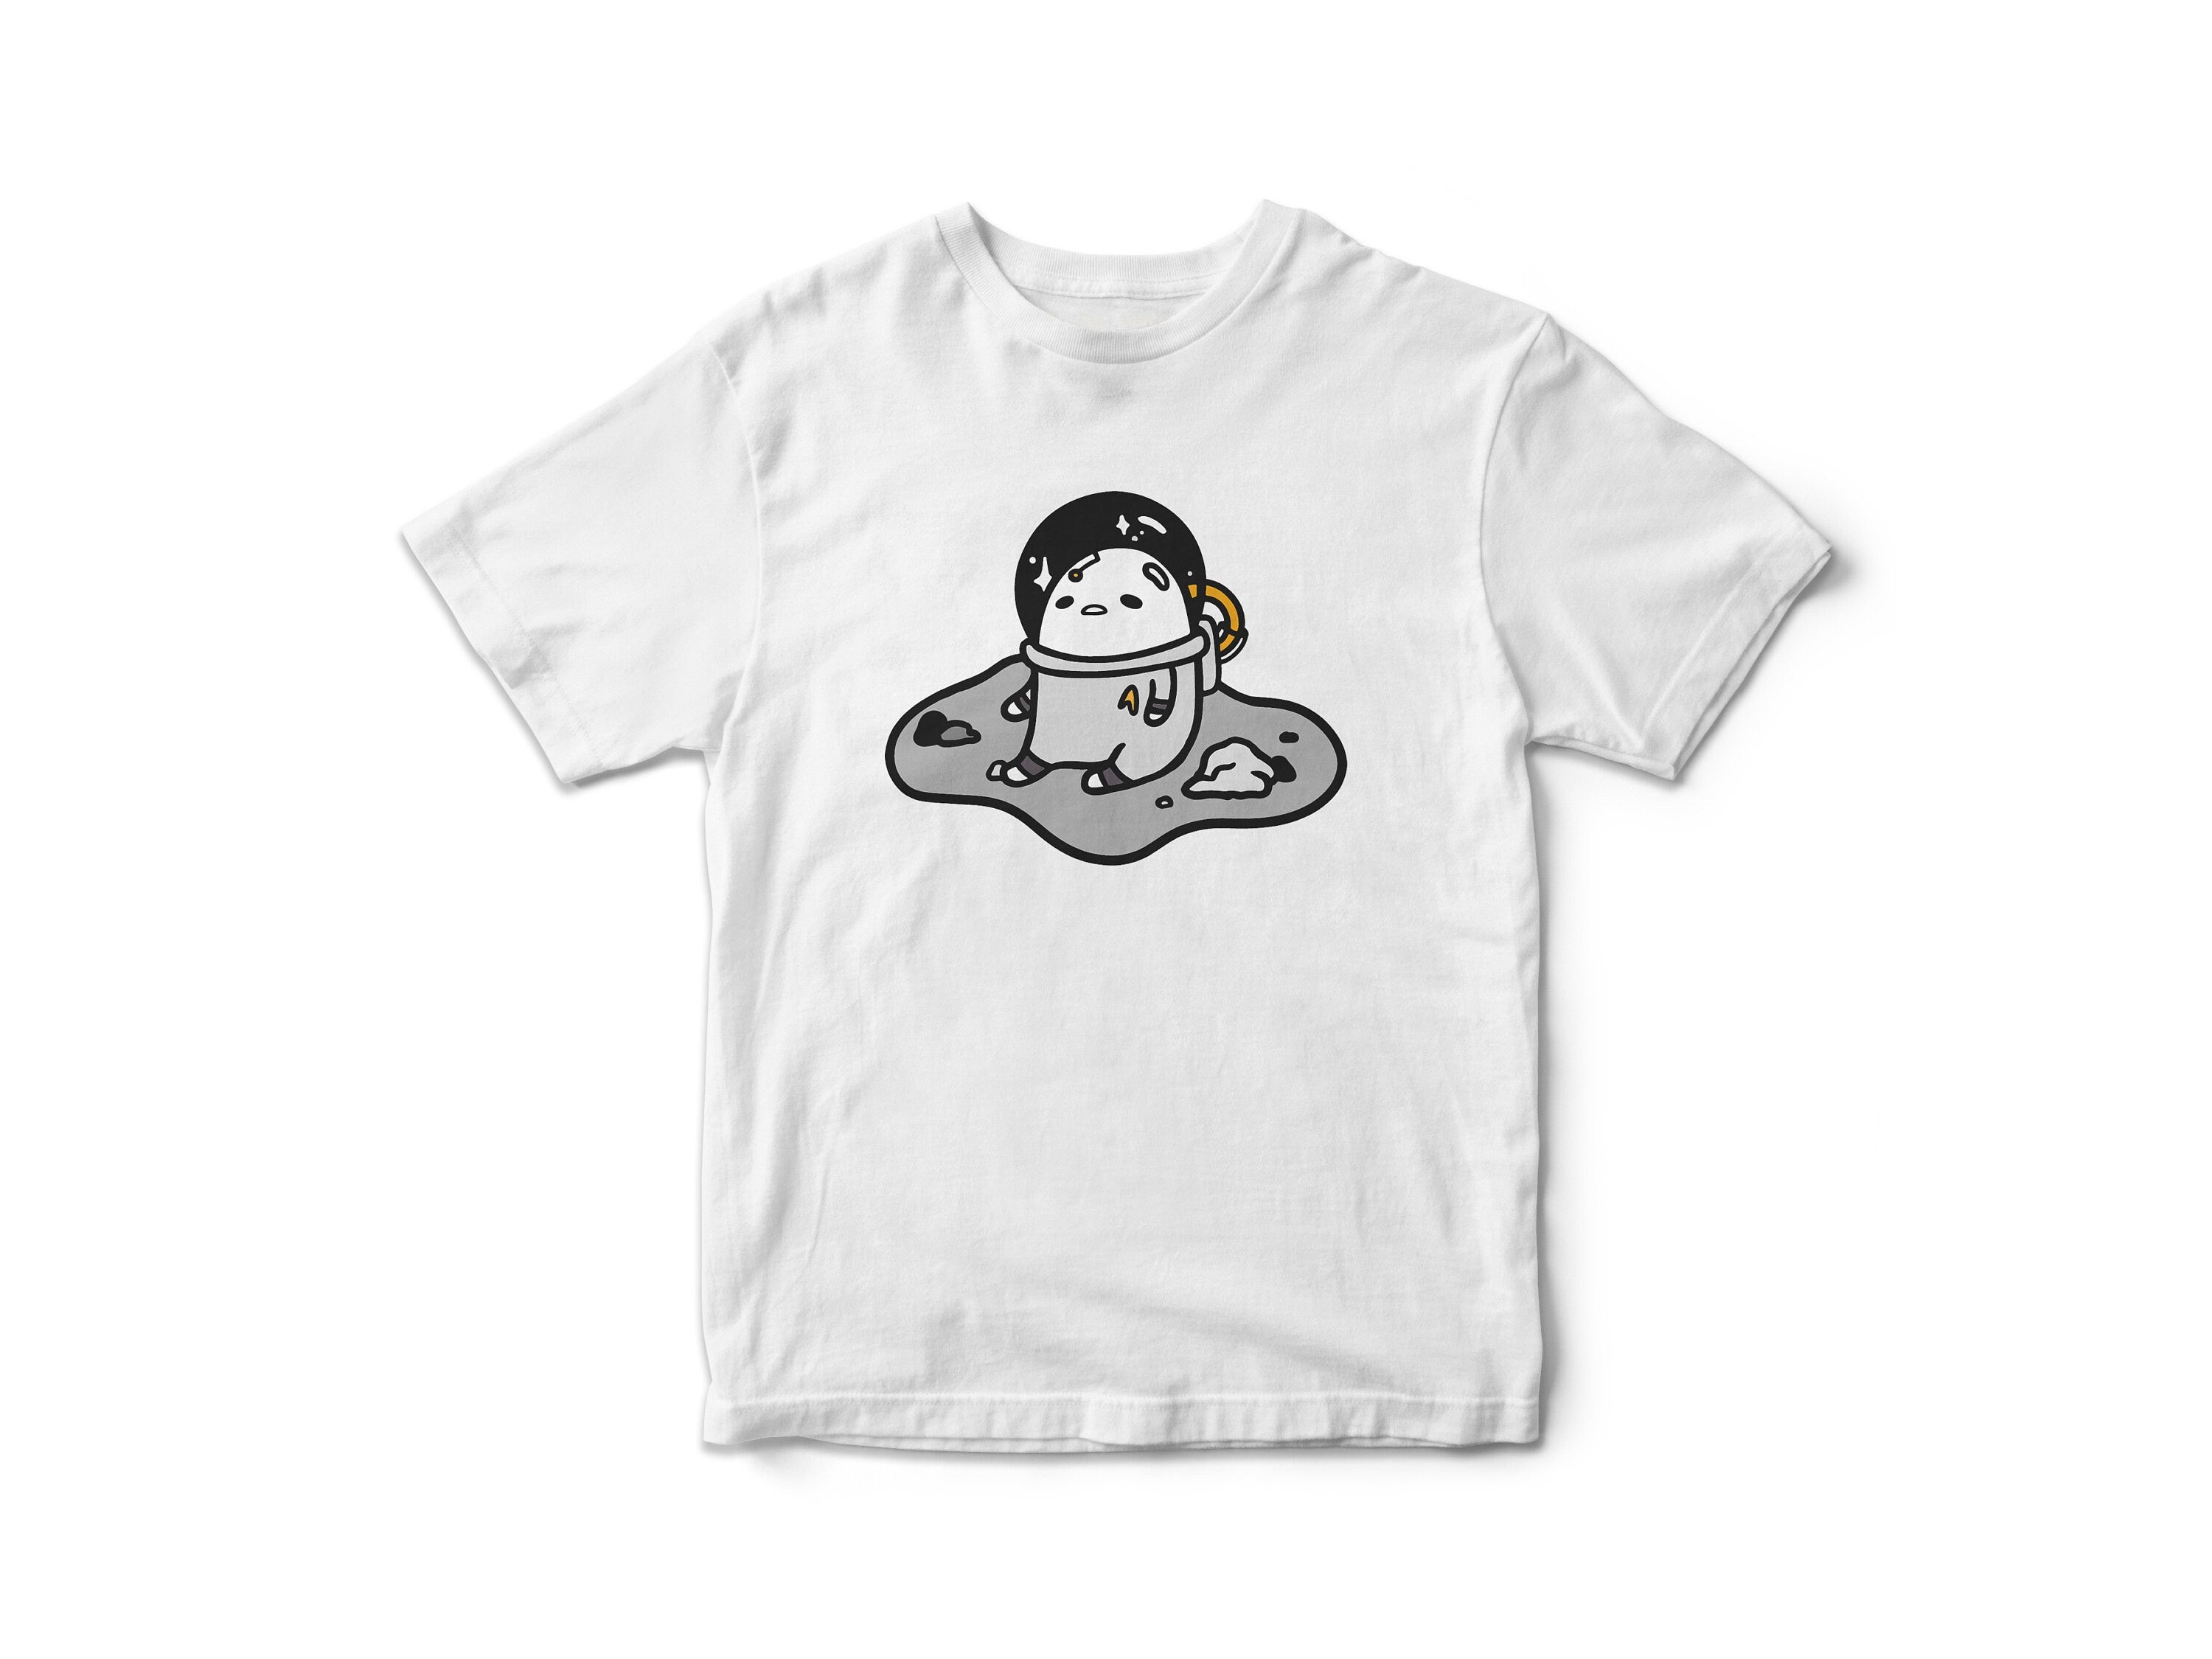 Alien-Tama T-Shirt - Kawaii Alien Egg Tee - Cute Space / Astronomy Fashion